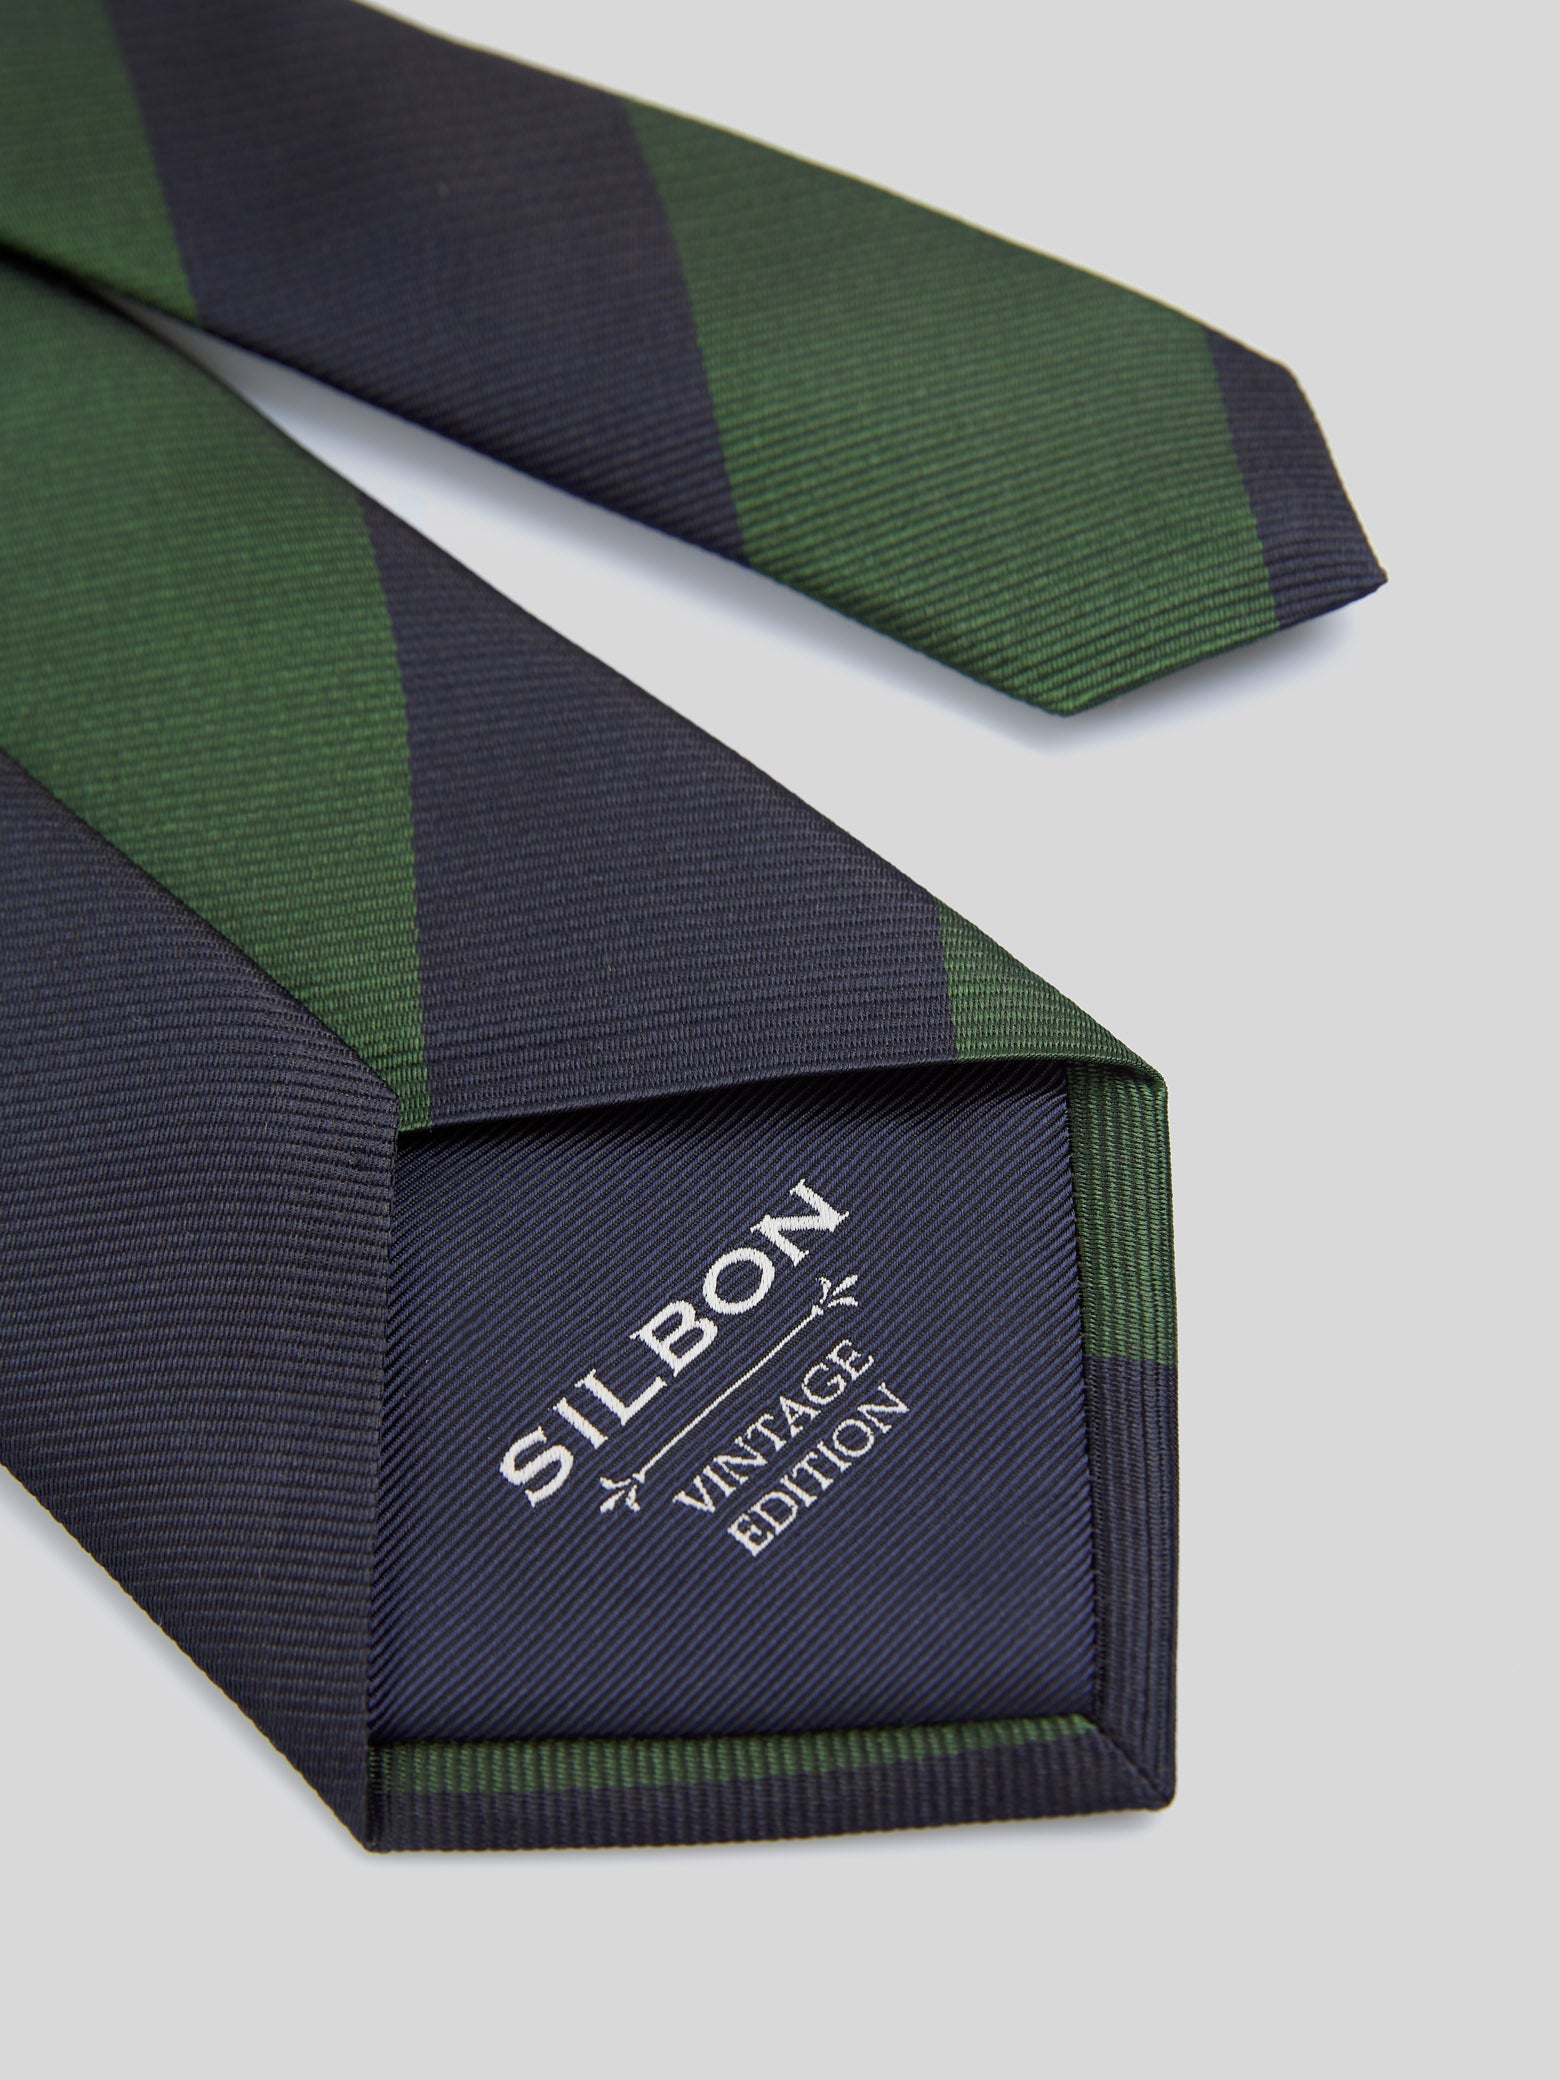 Corbata vintage silbon raya ancha verde